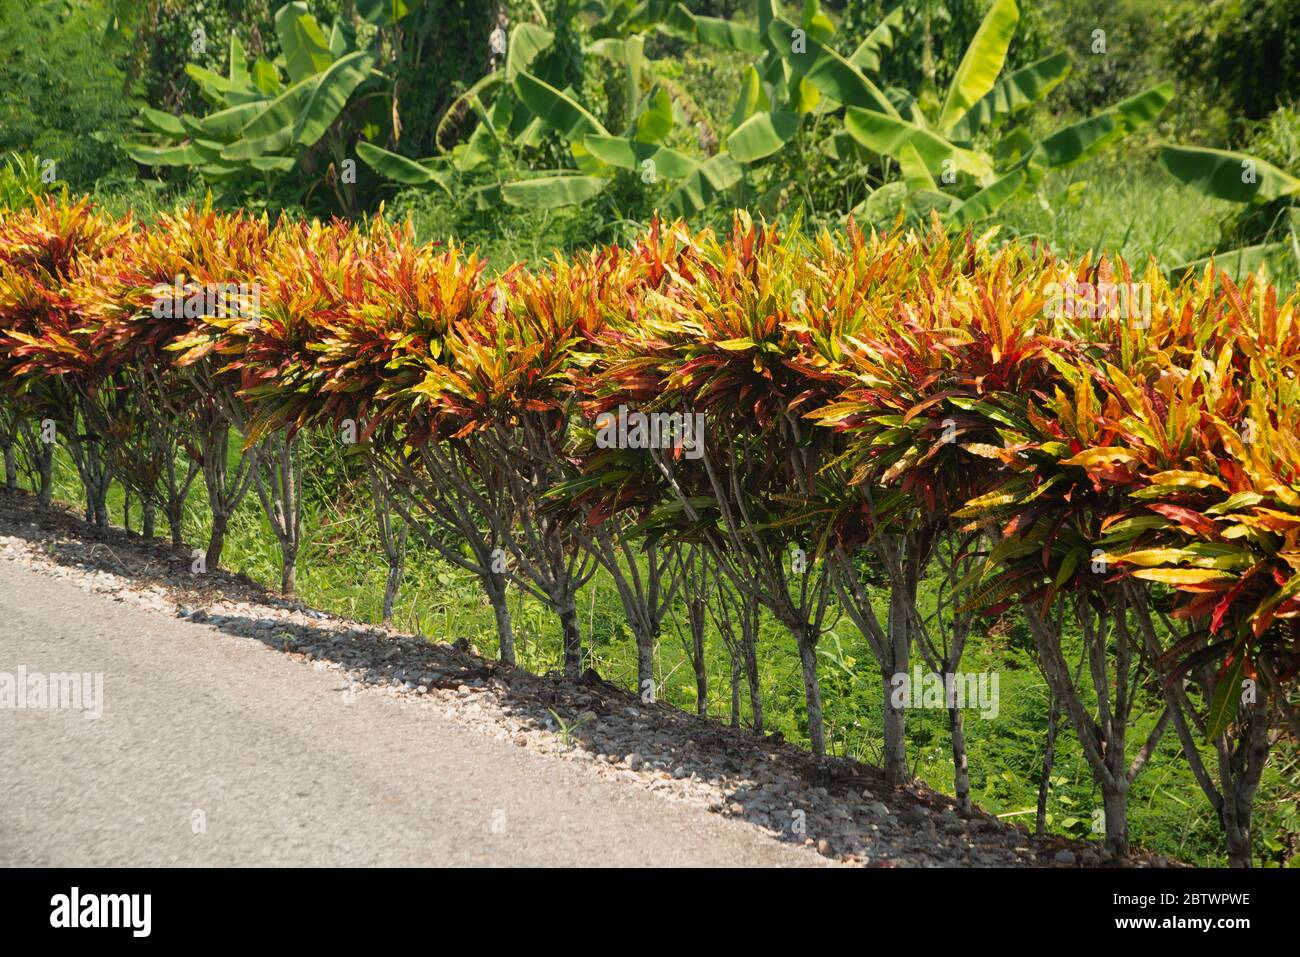 Row of multicolored garden croton plant (Codiaeum variegatum) among green tropical vegetation. Stock Photo